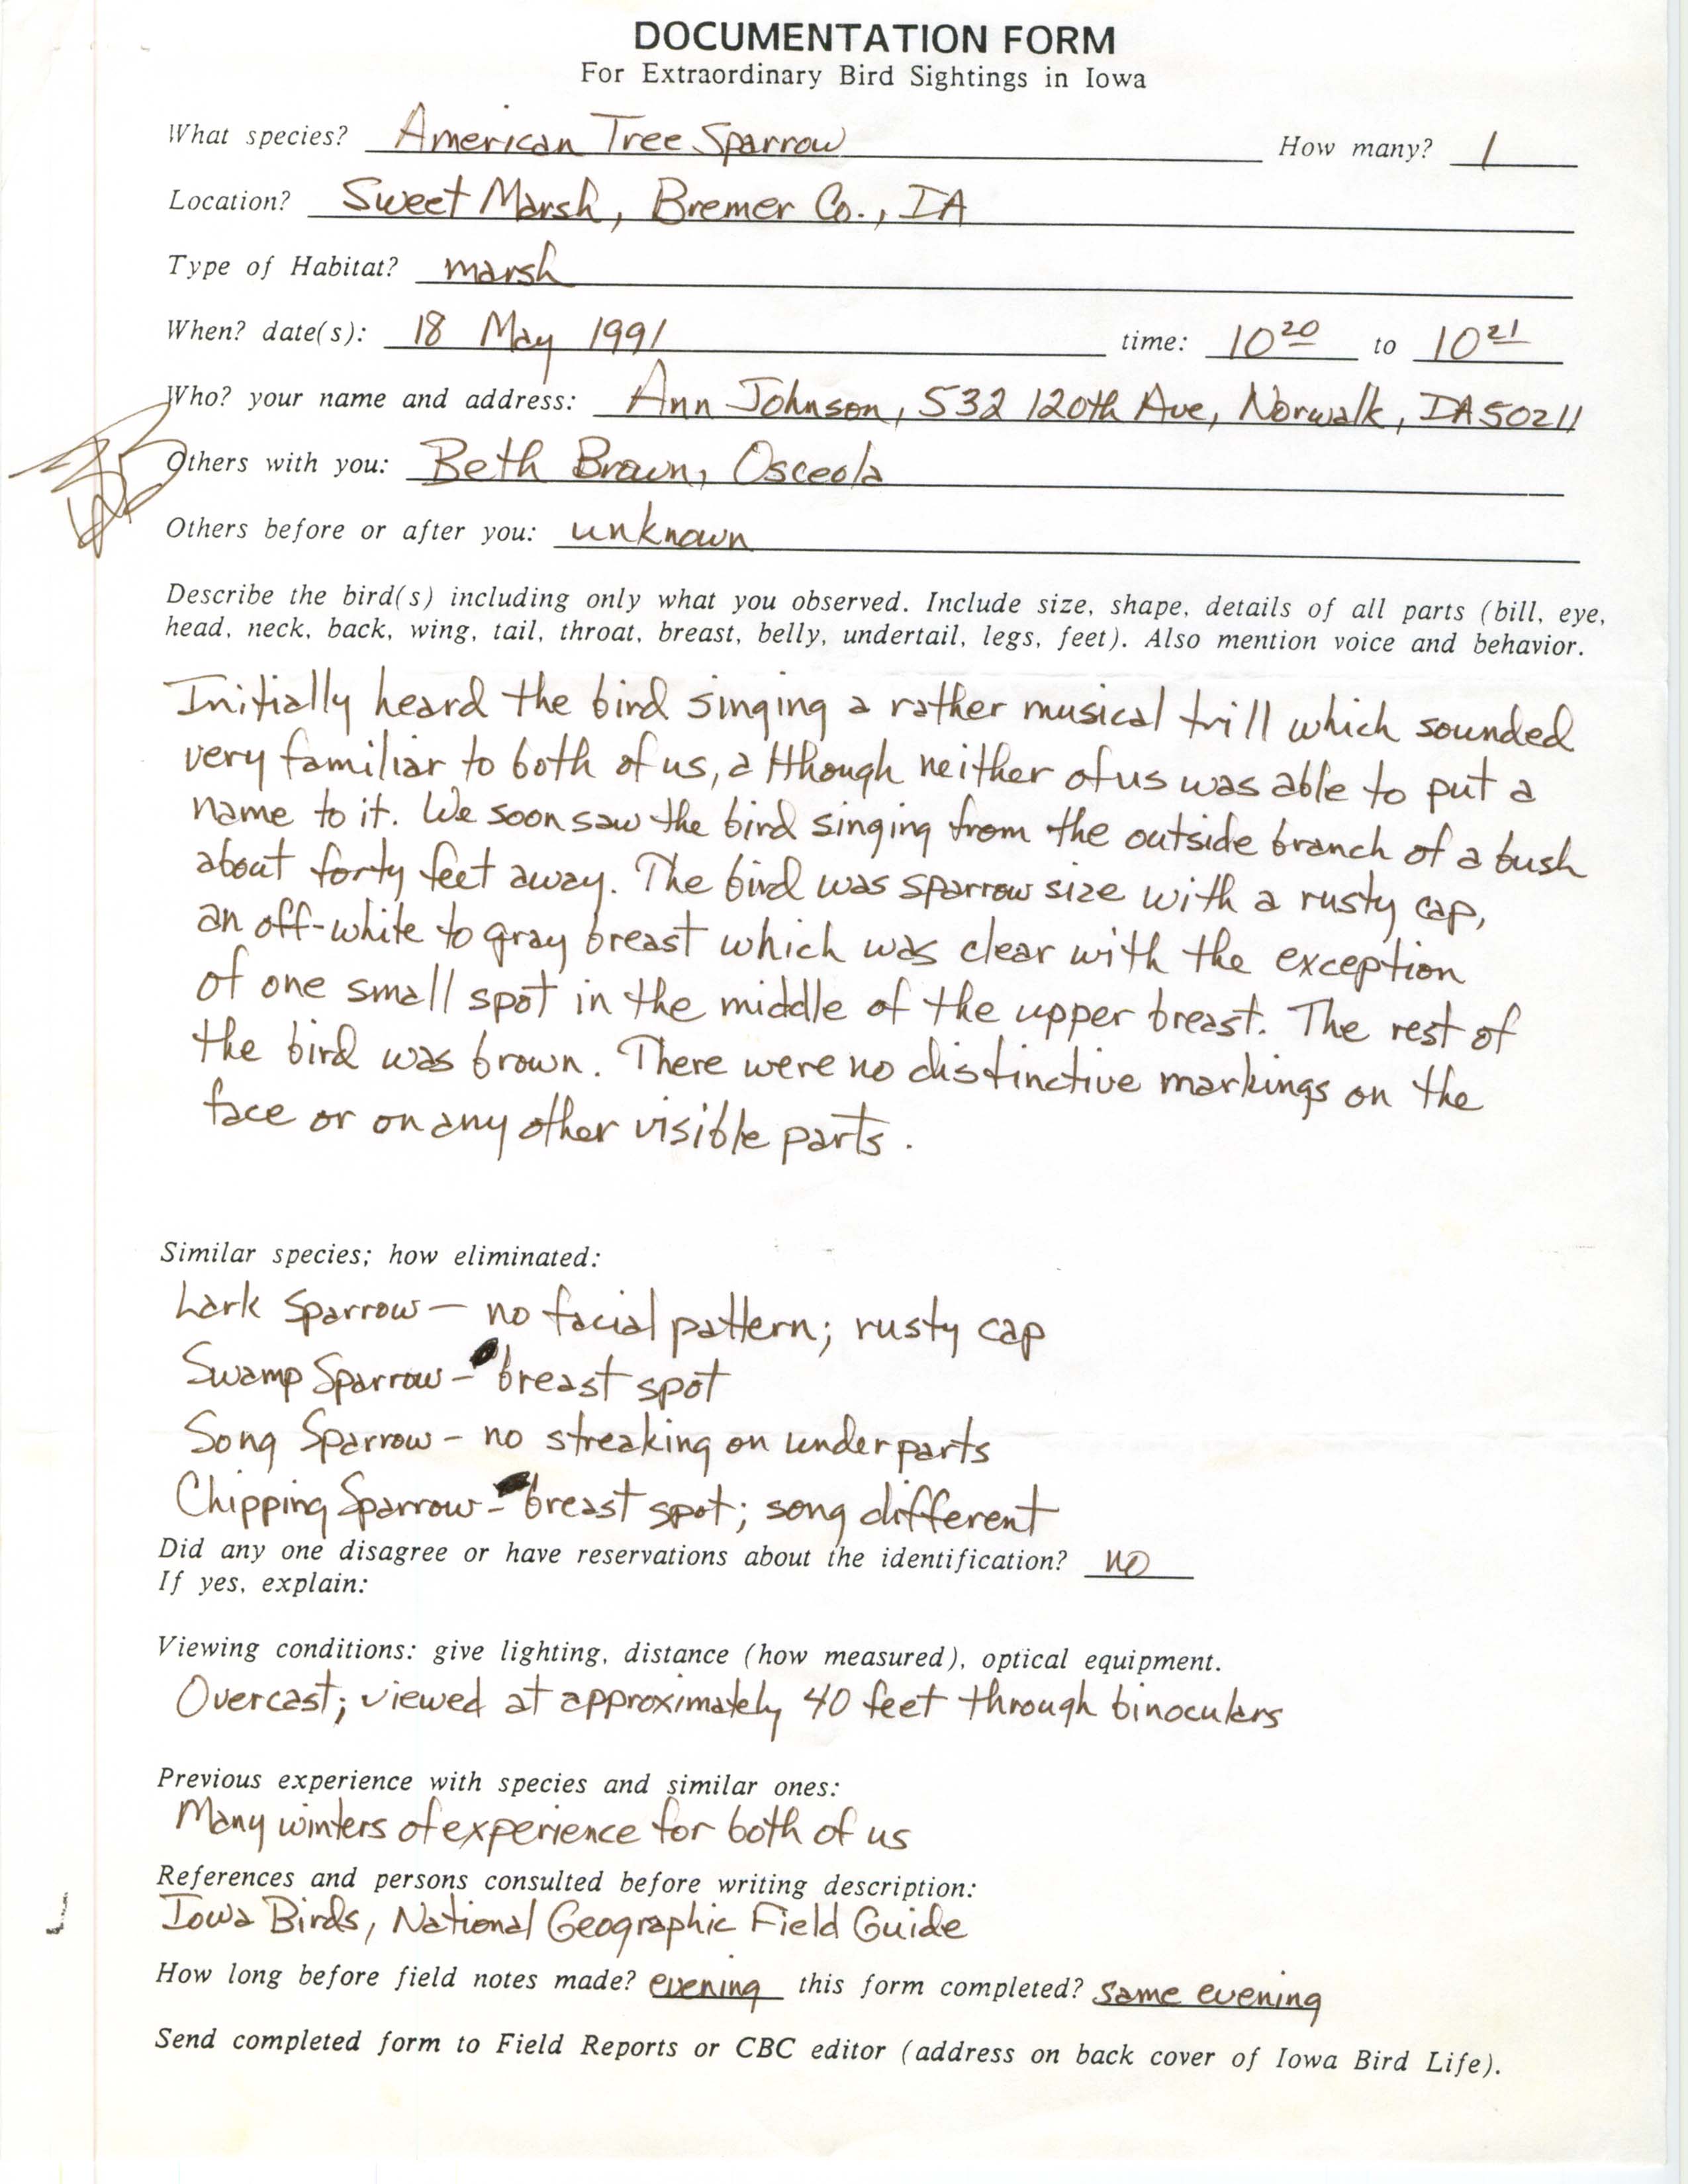 Rare bird documentation form for American Tree Sparrow at Sweet Marsh, 1991